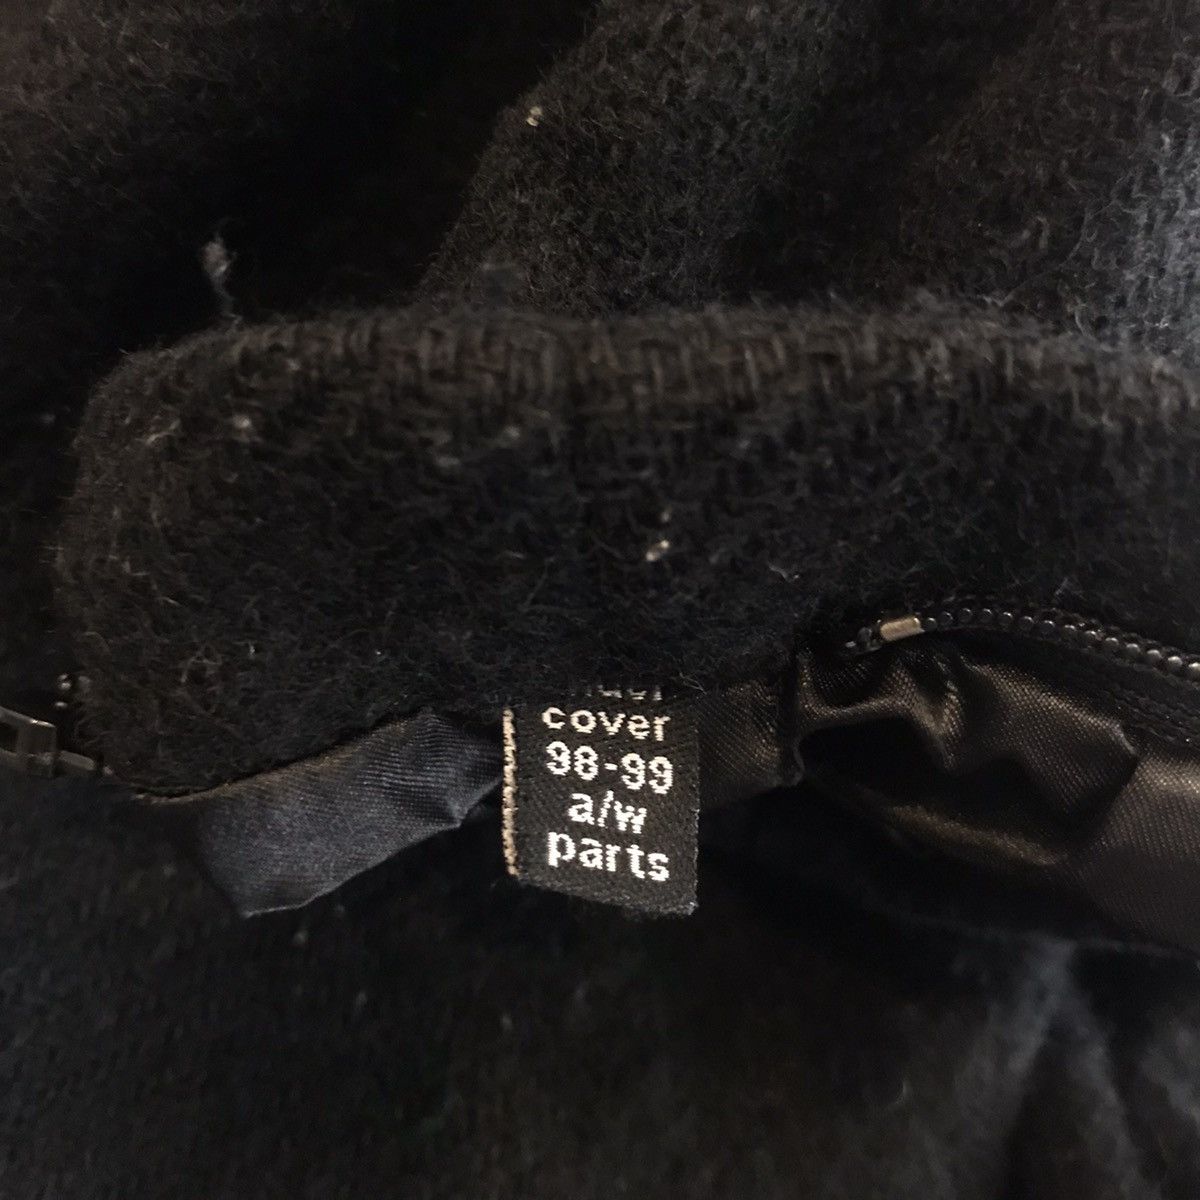 Undercover Jun Takahashi small parts wool jacket AW98/99 - 4